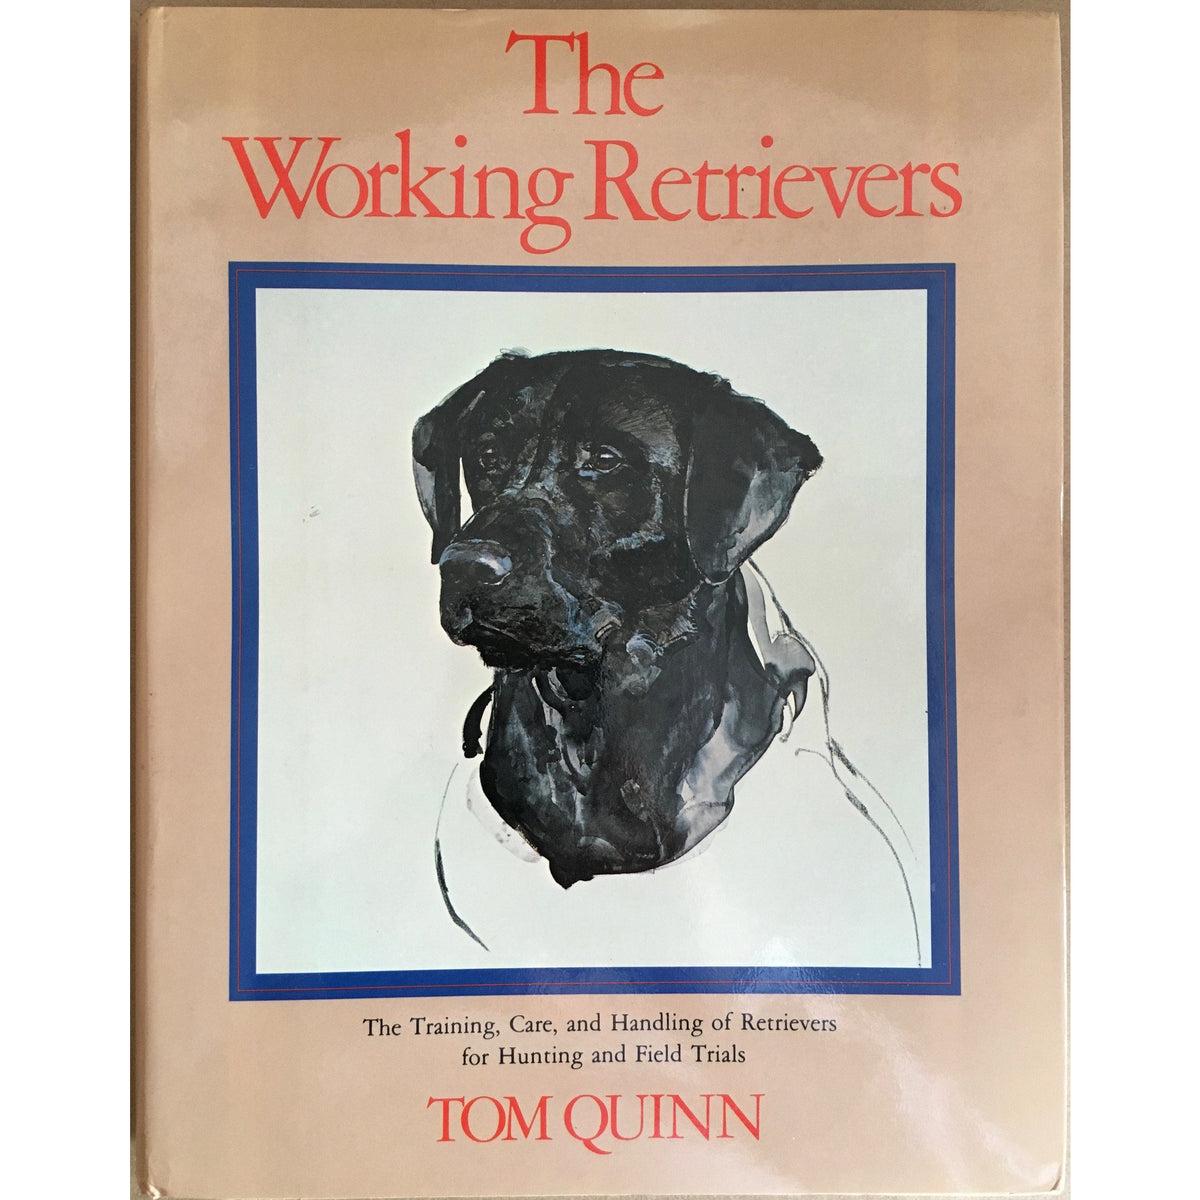 The Working Retreivers 1st ed